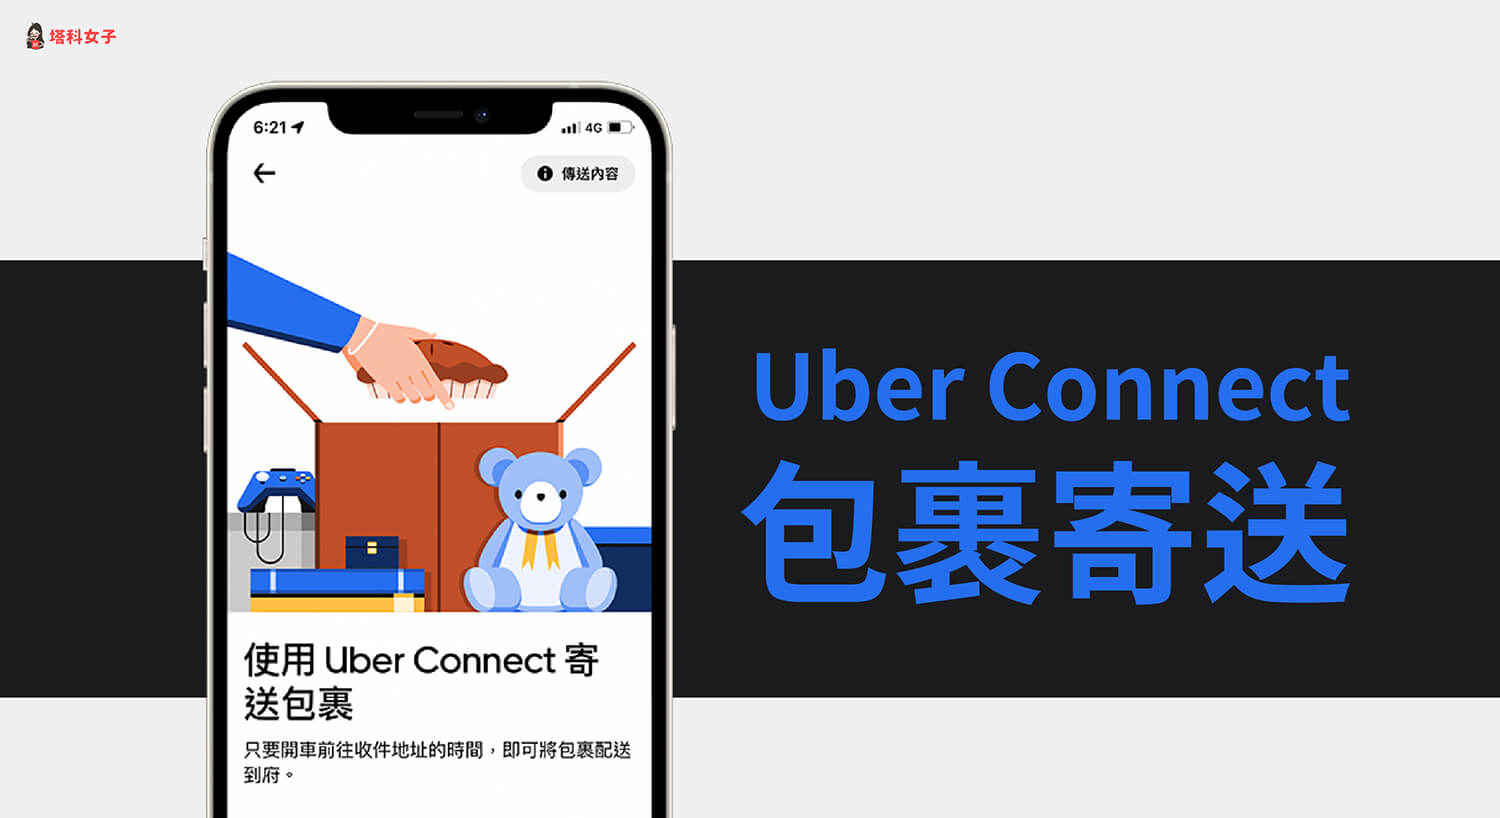 Uber Connect 優快送怎麼用？快速寄送與收取包裹！